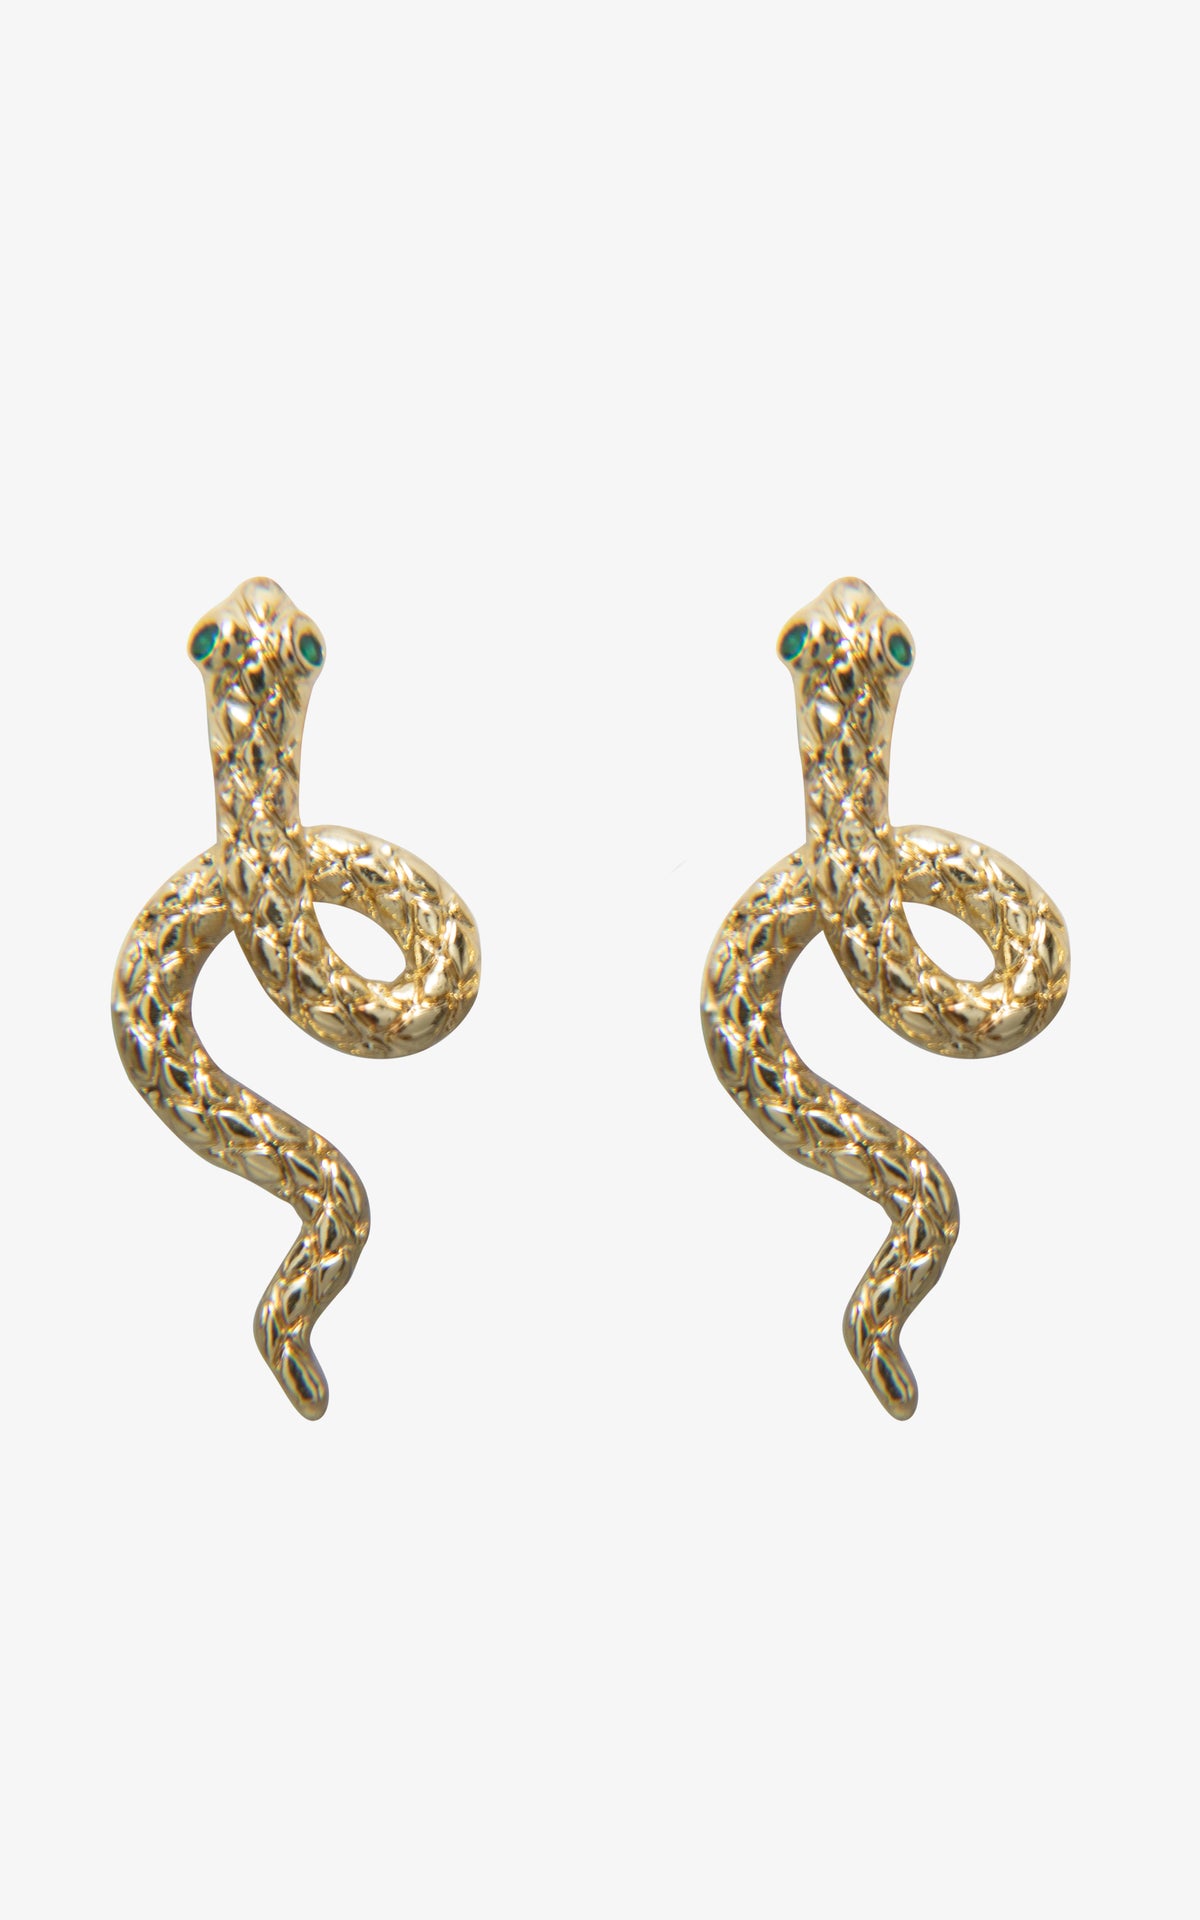 Swirled Snake Stud Earrings